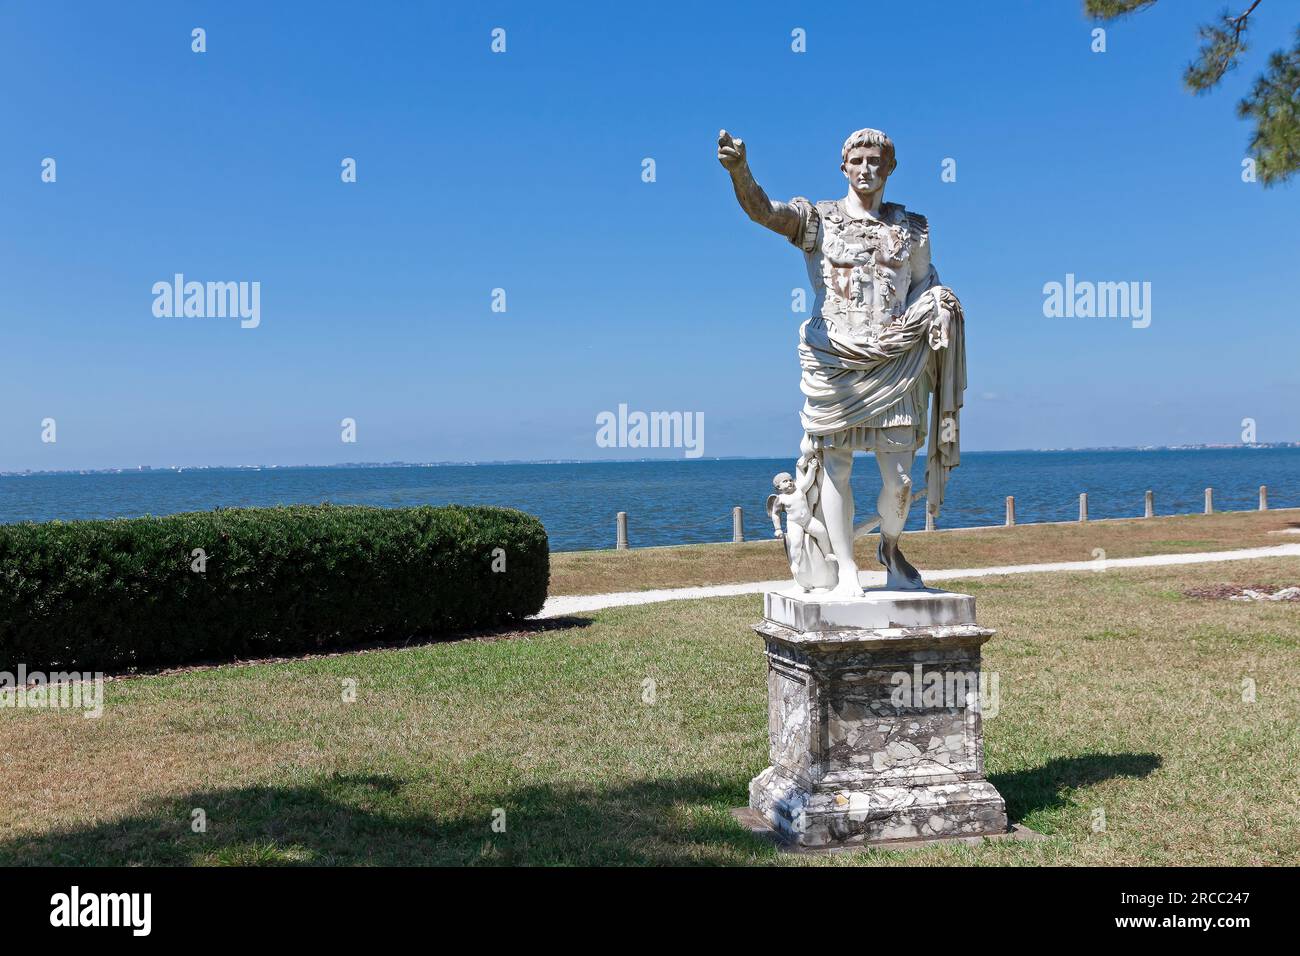 Statue of Gaius Julius Caesar, Roman Emperor, General, and Statesman on the estate of John and Mable Ringling in Sarasota, Florida, USA. Stock Photo